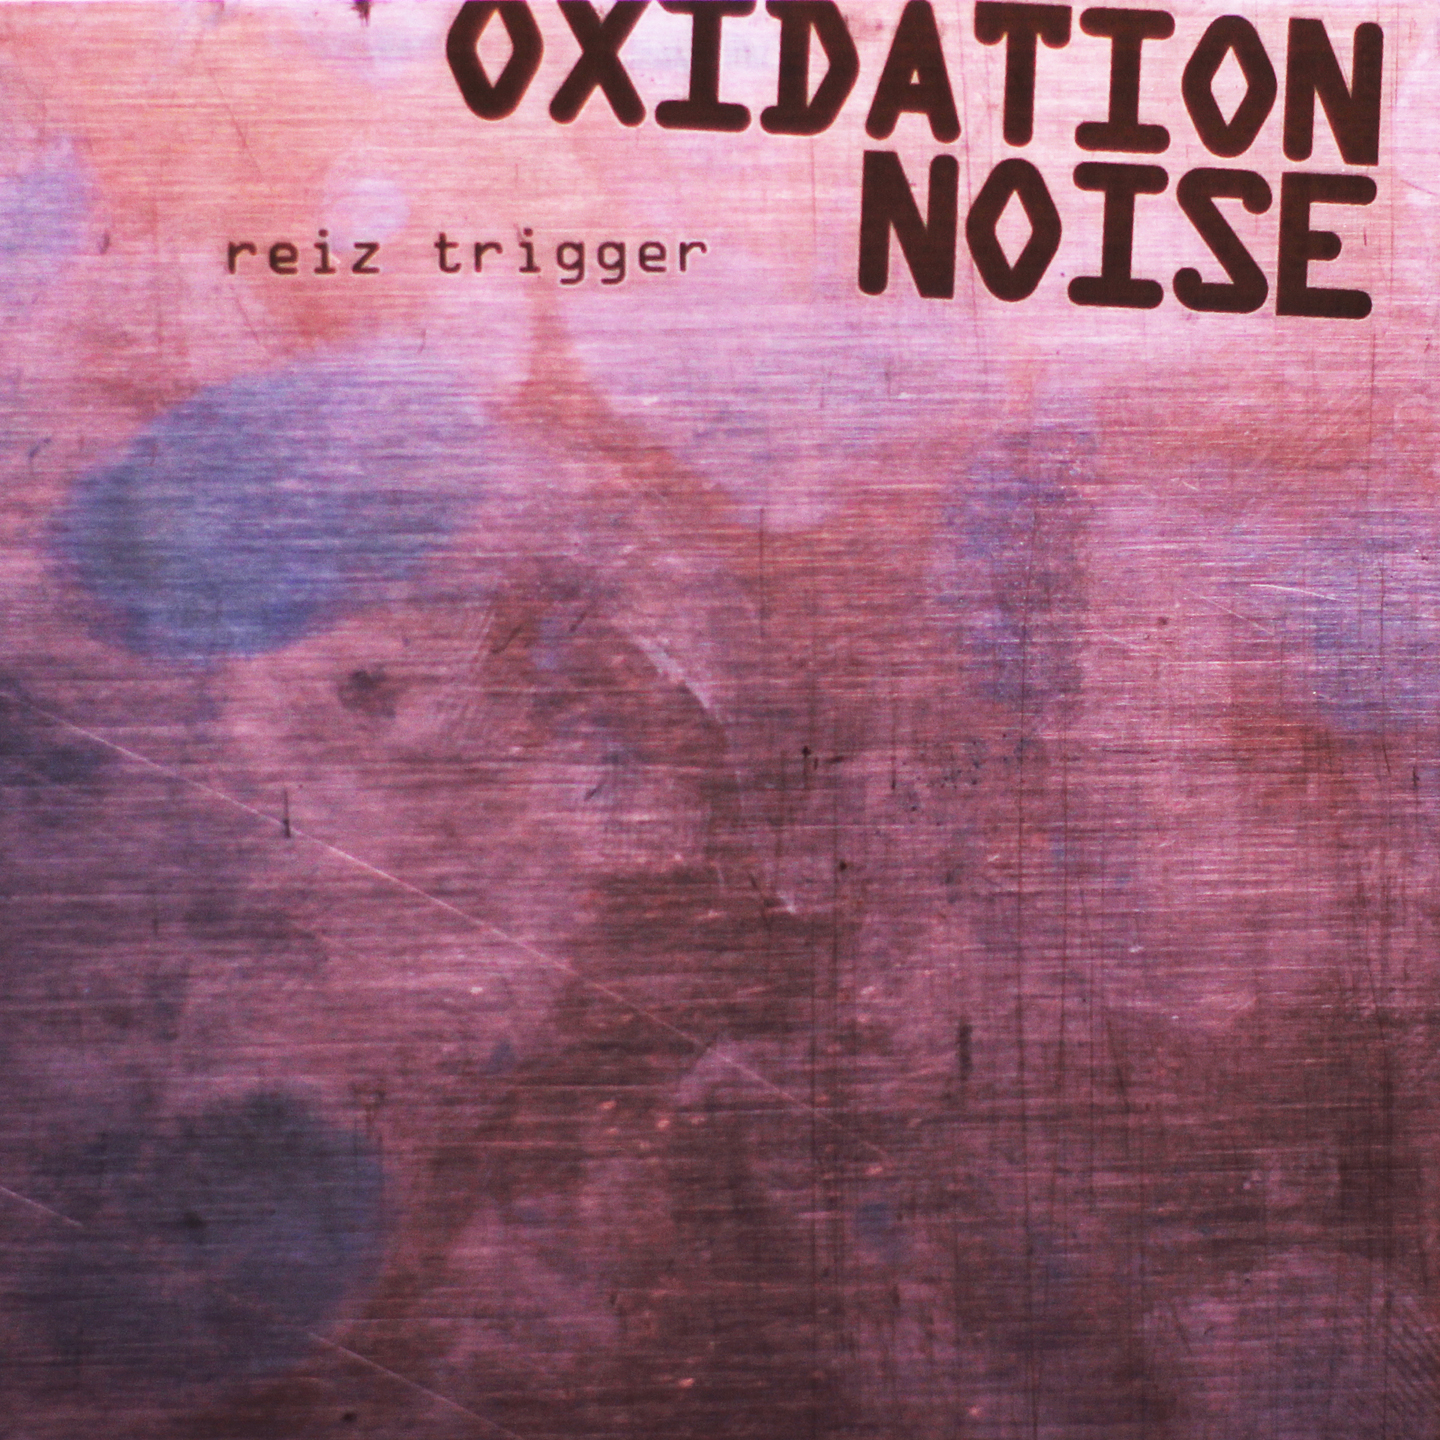 CD Reiz Trigger: "Oxidation Noise" (Deluxe Edition)